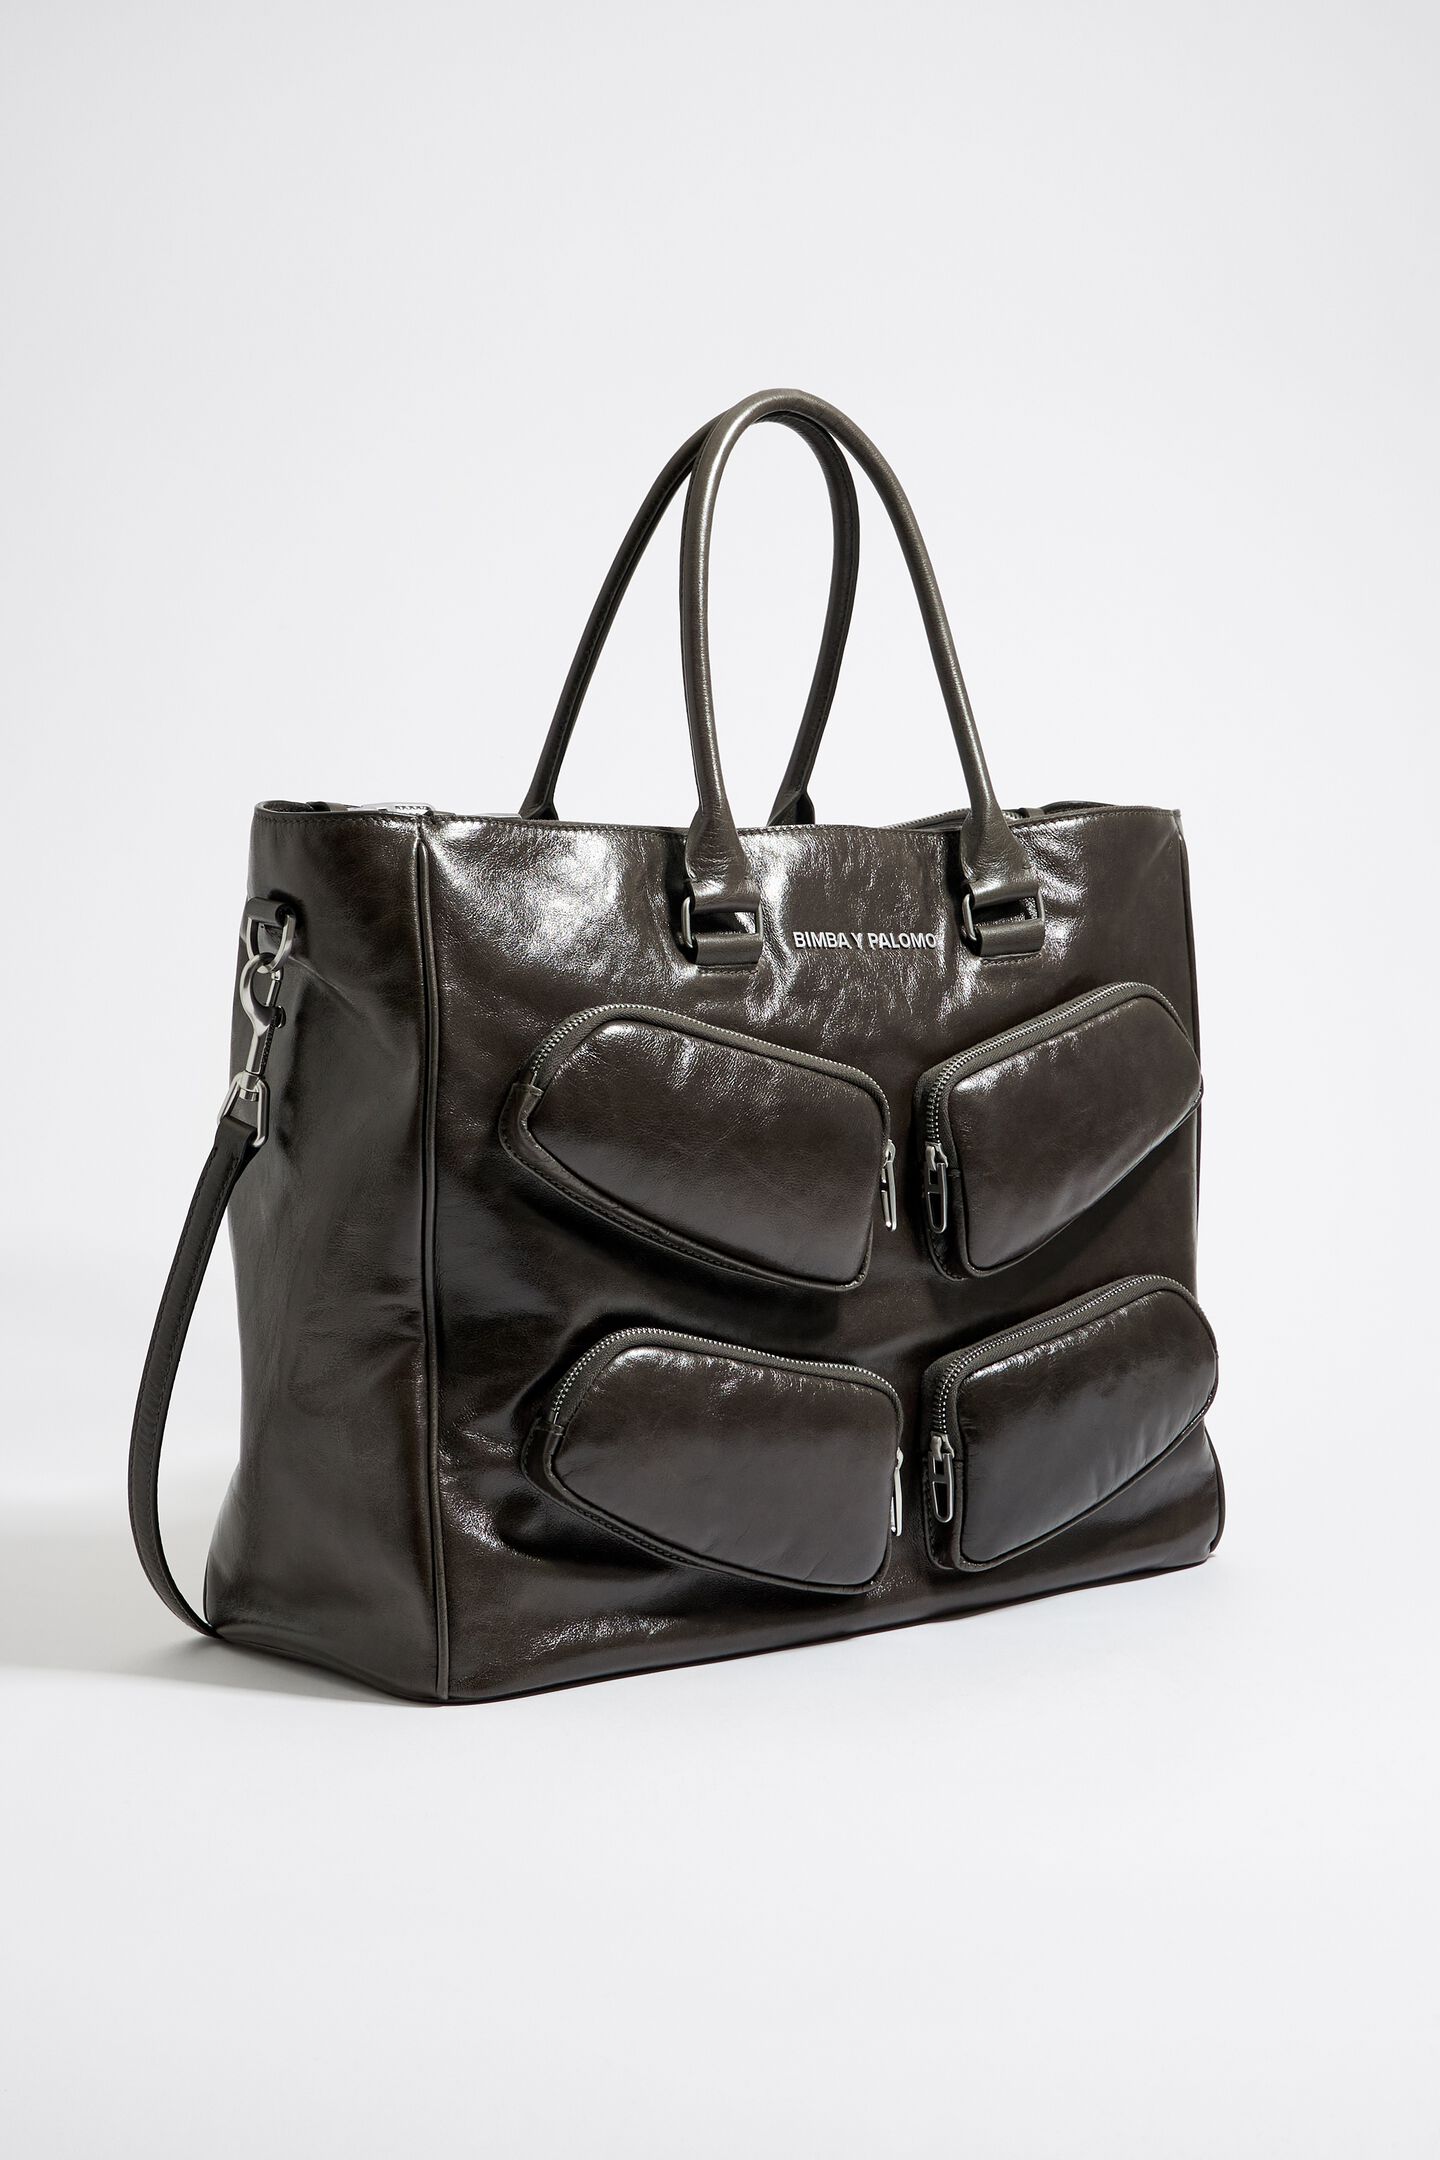 Bimba Y Lola Large Leather Tote Bag - Black